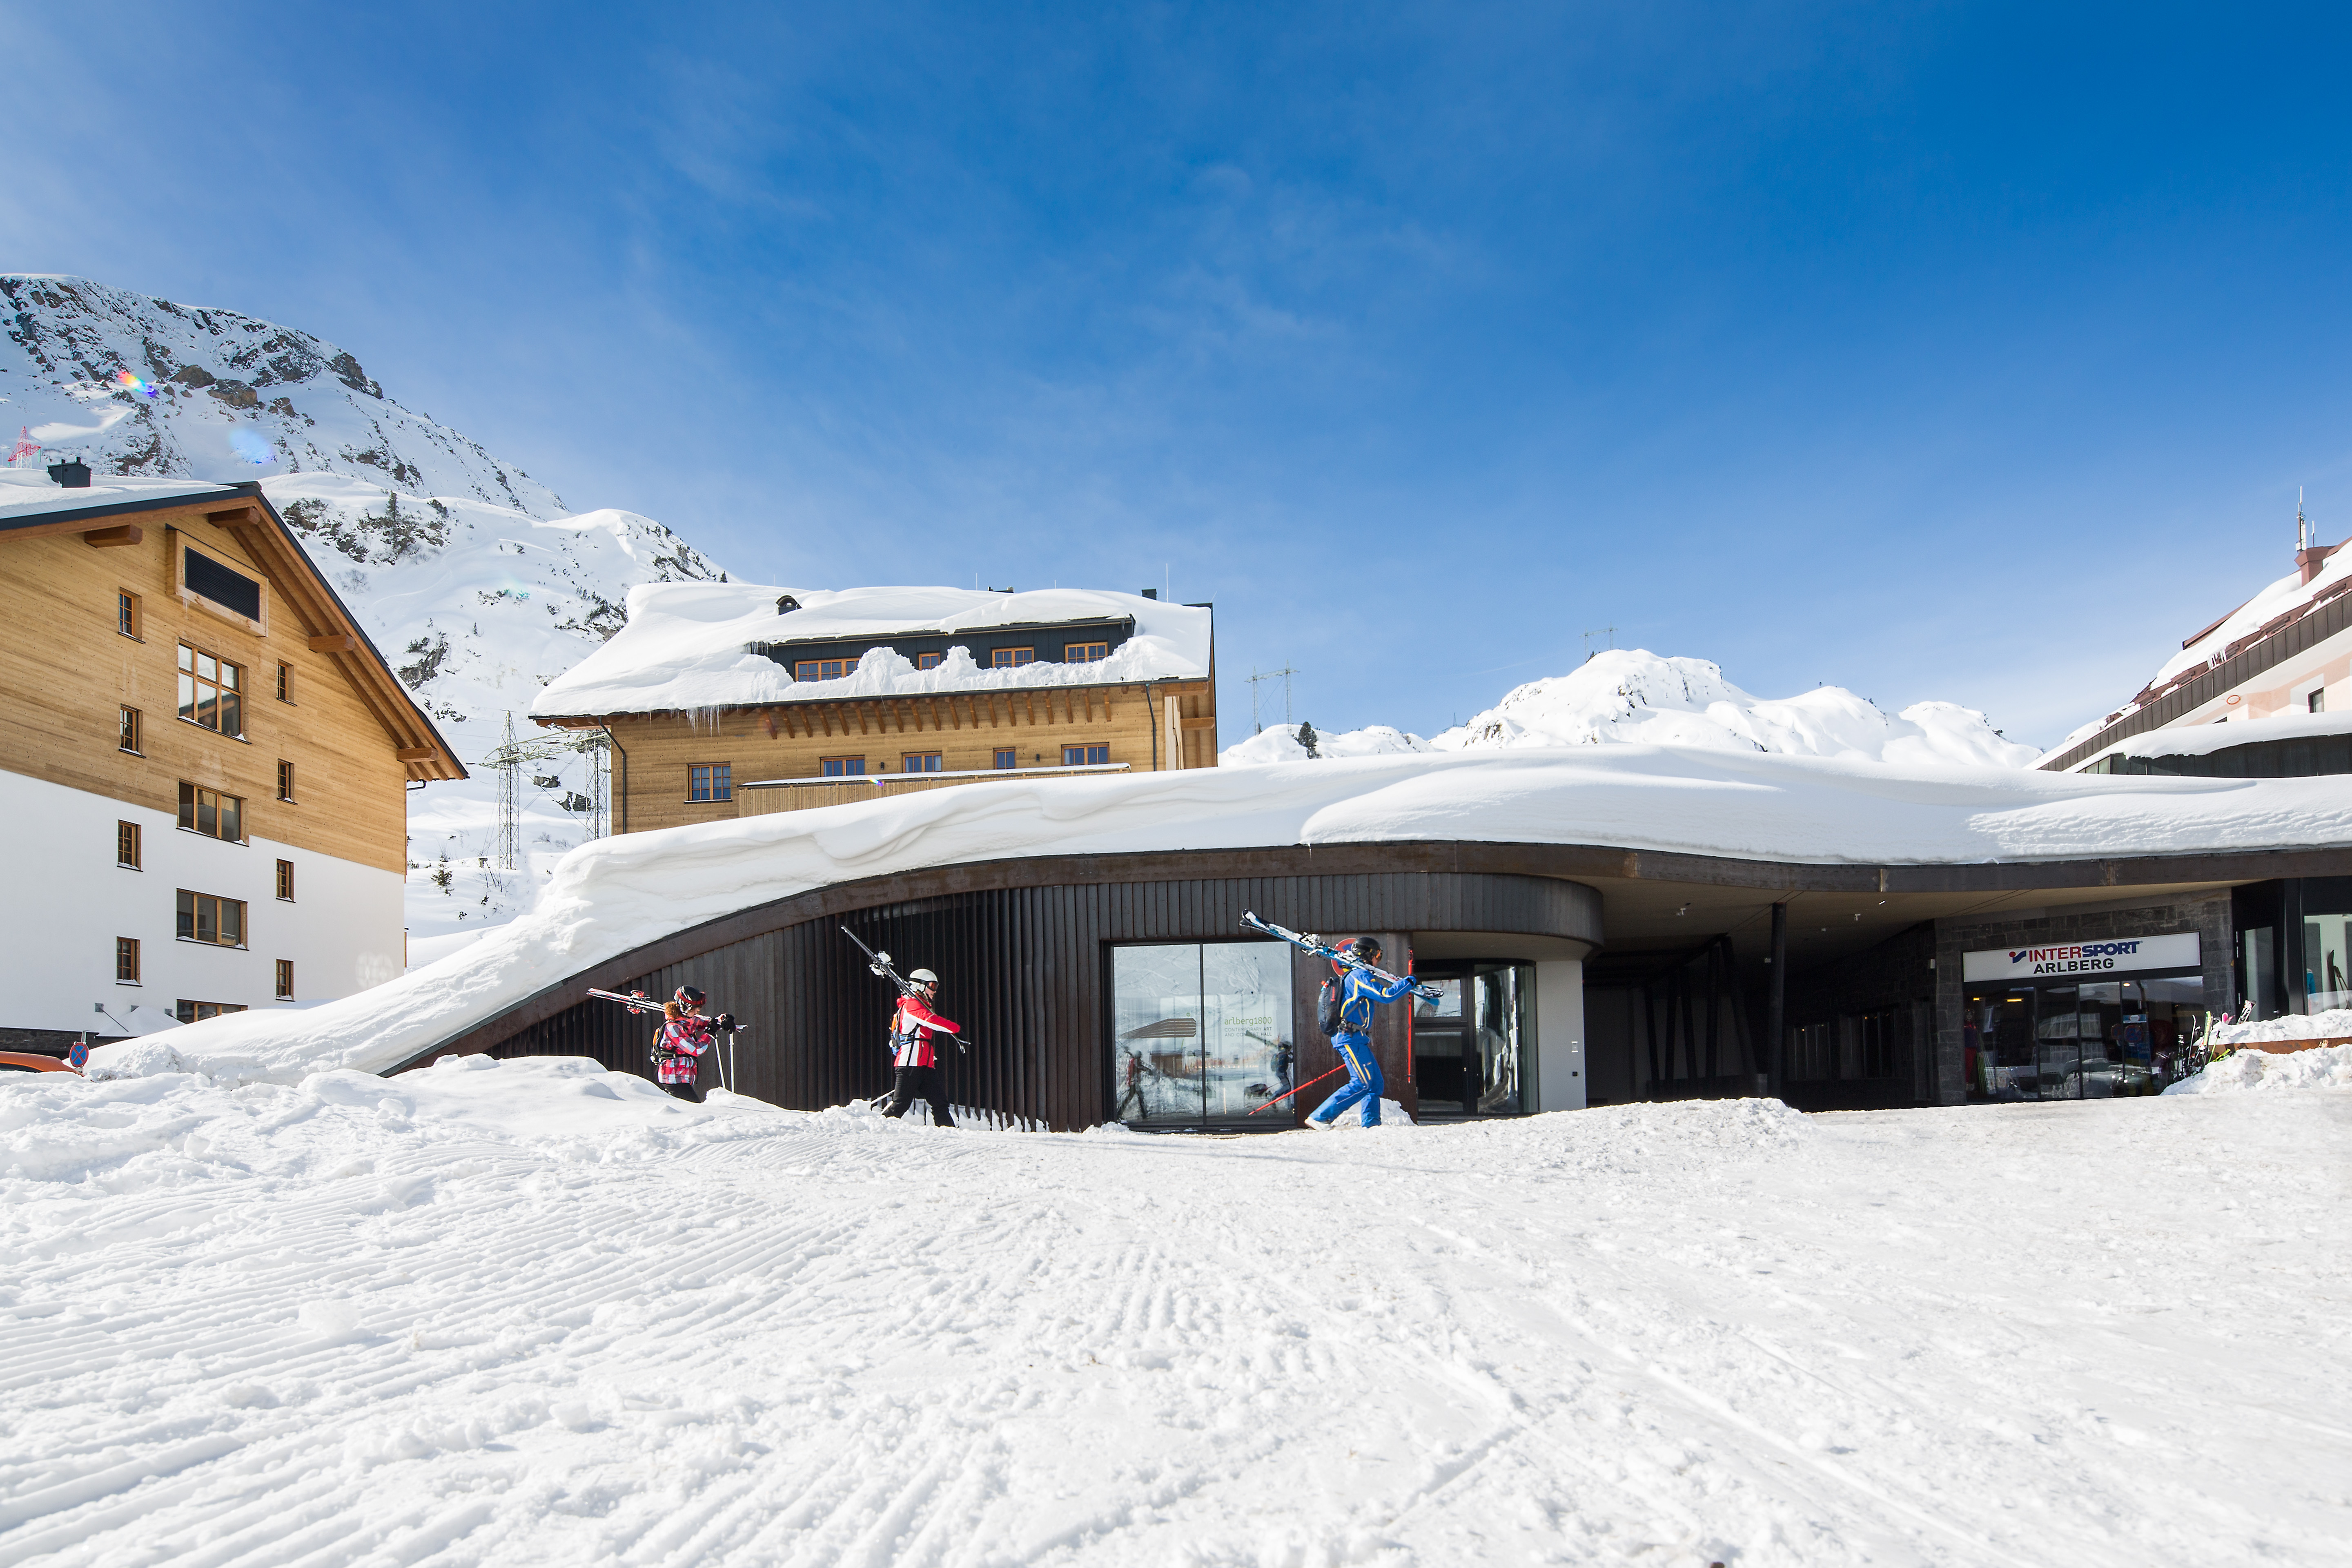 arlberg1800, Schnee